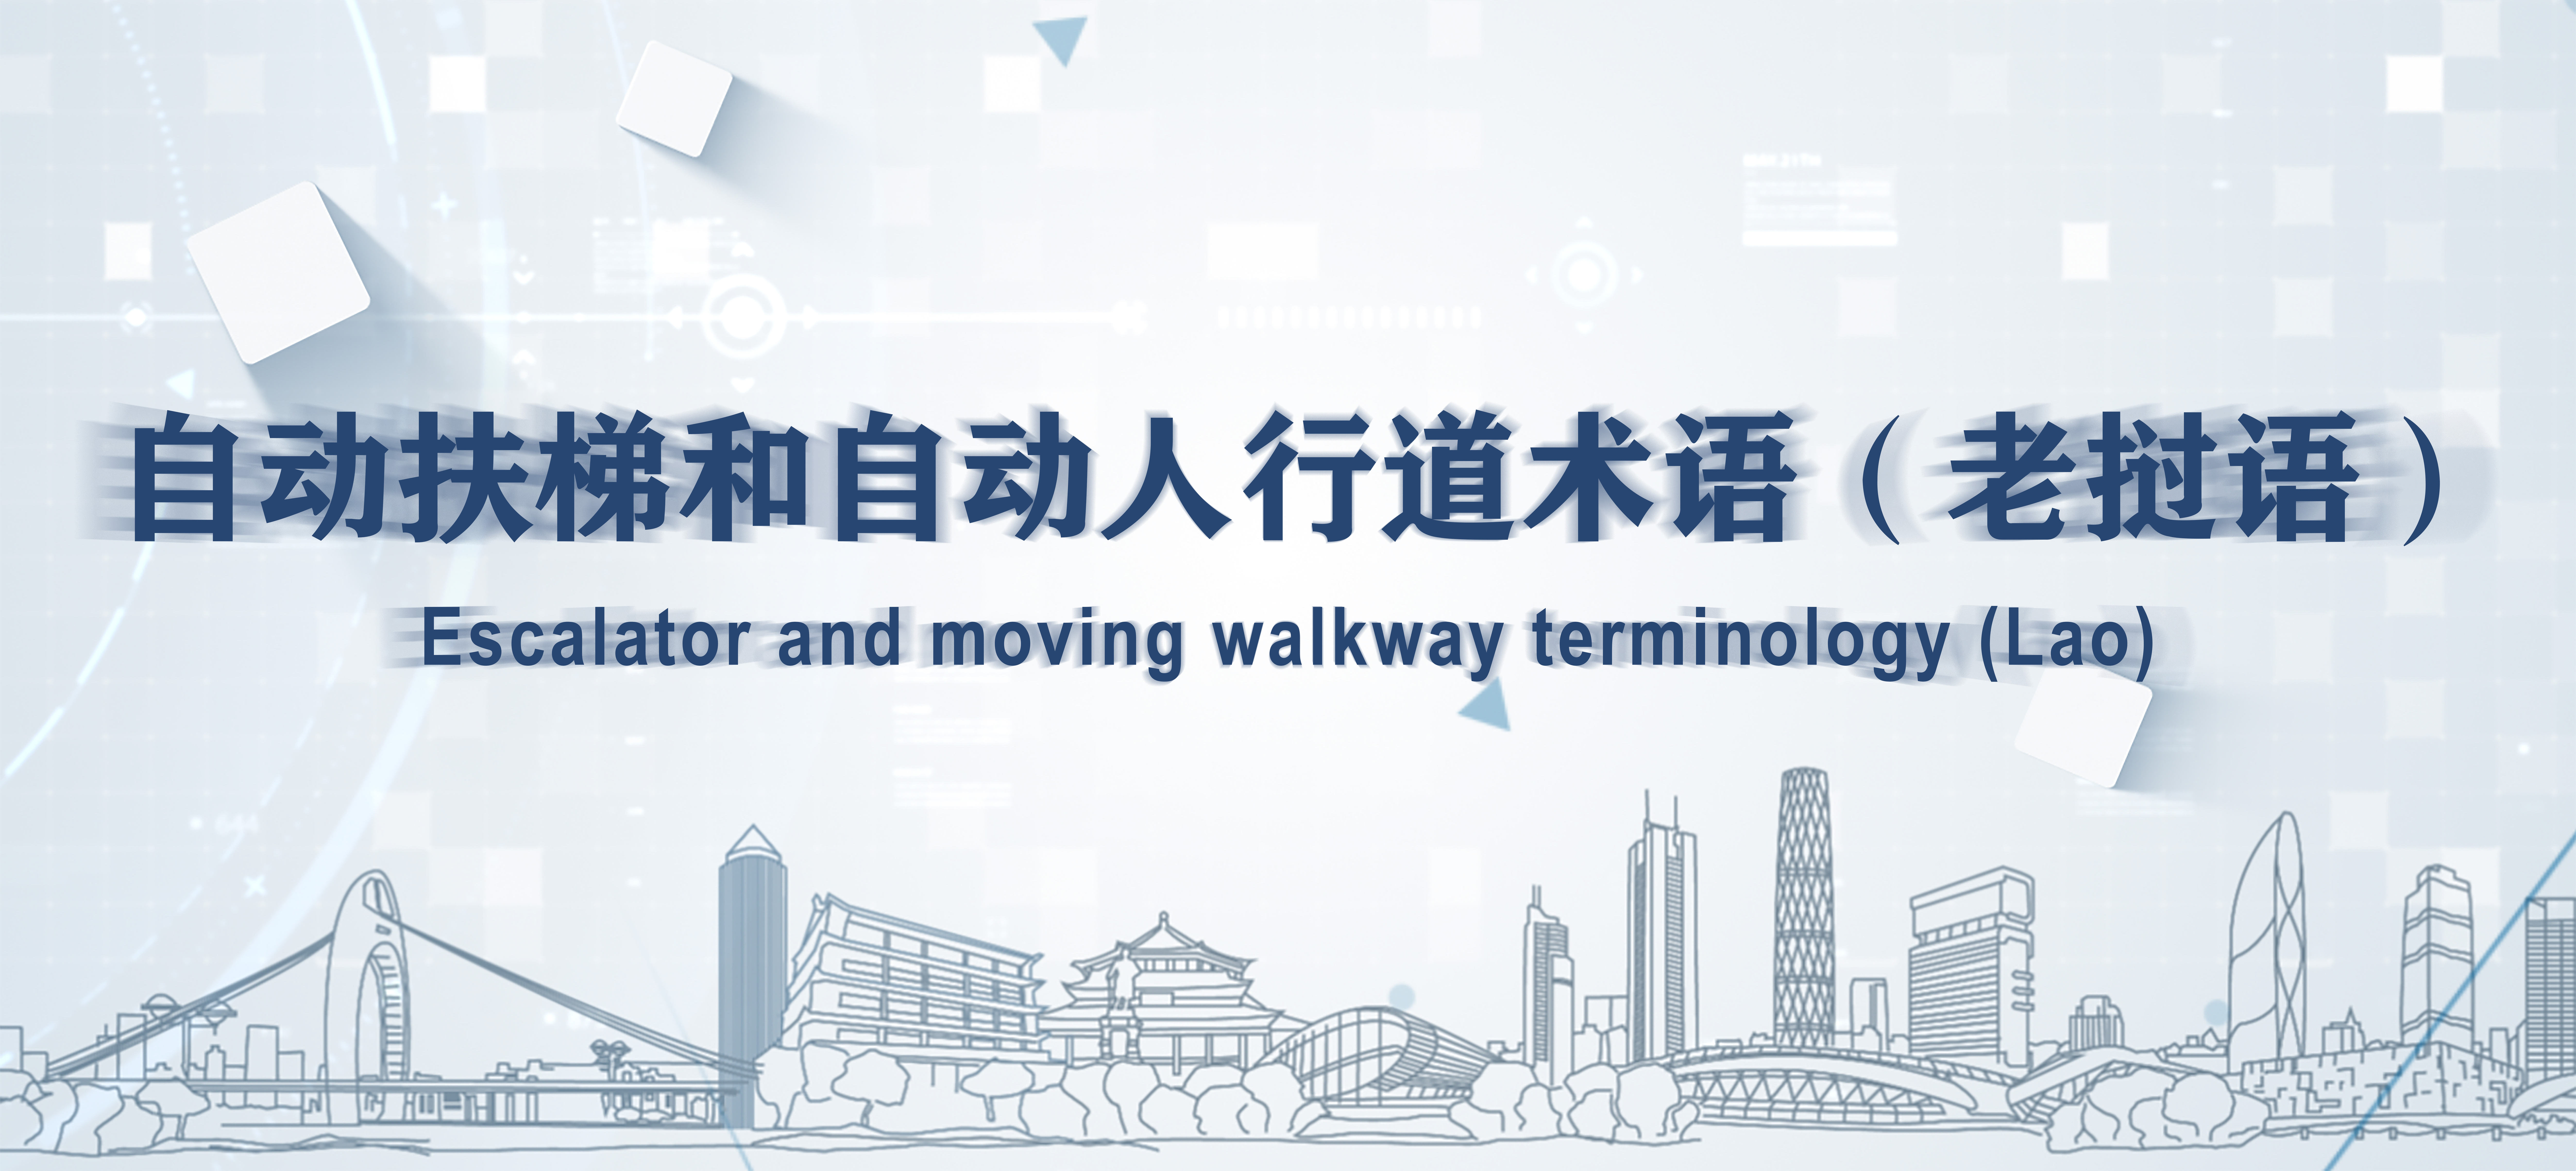 Escalator and moving walkway terminology(Lao)